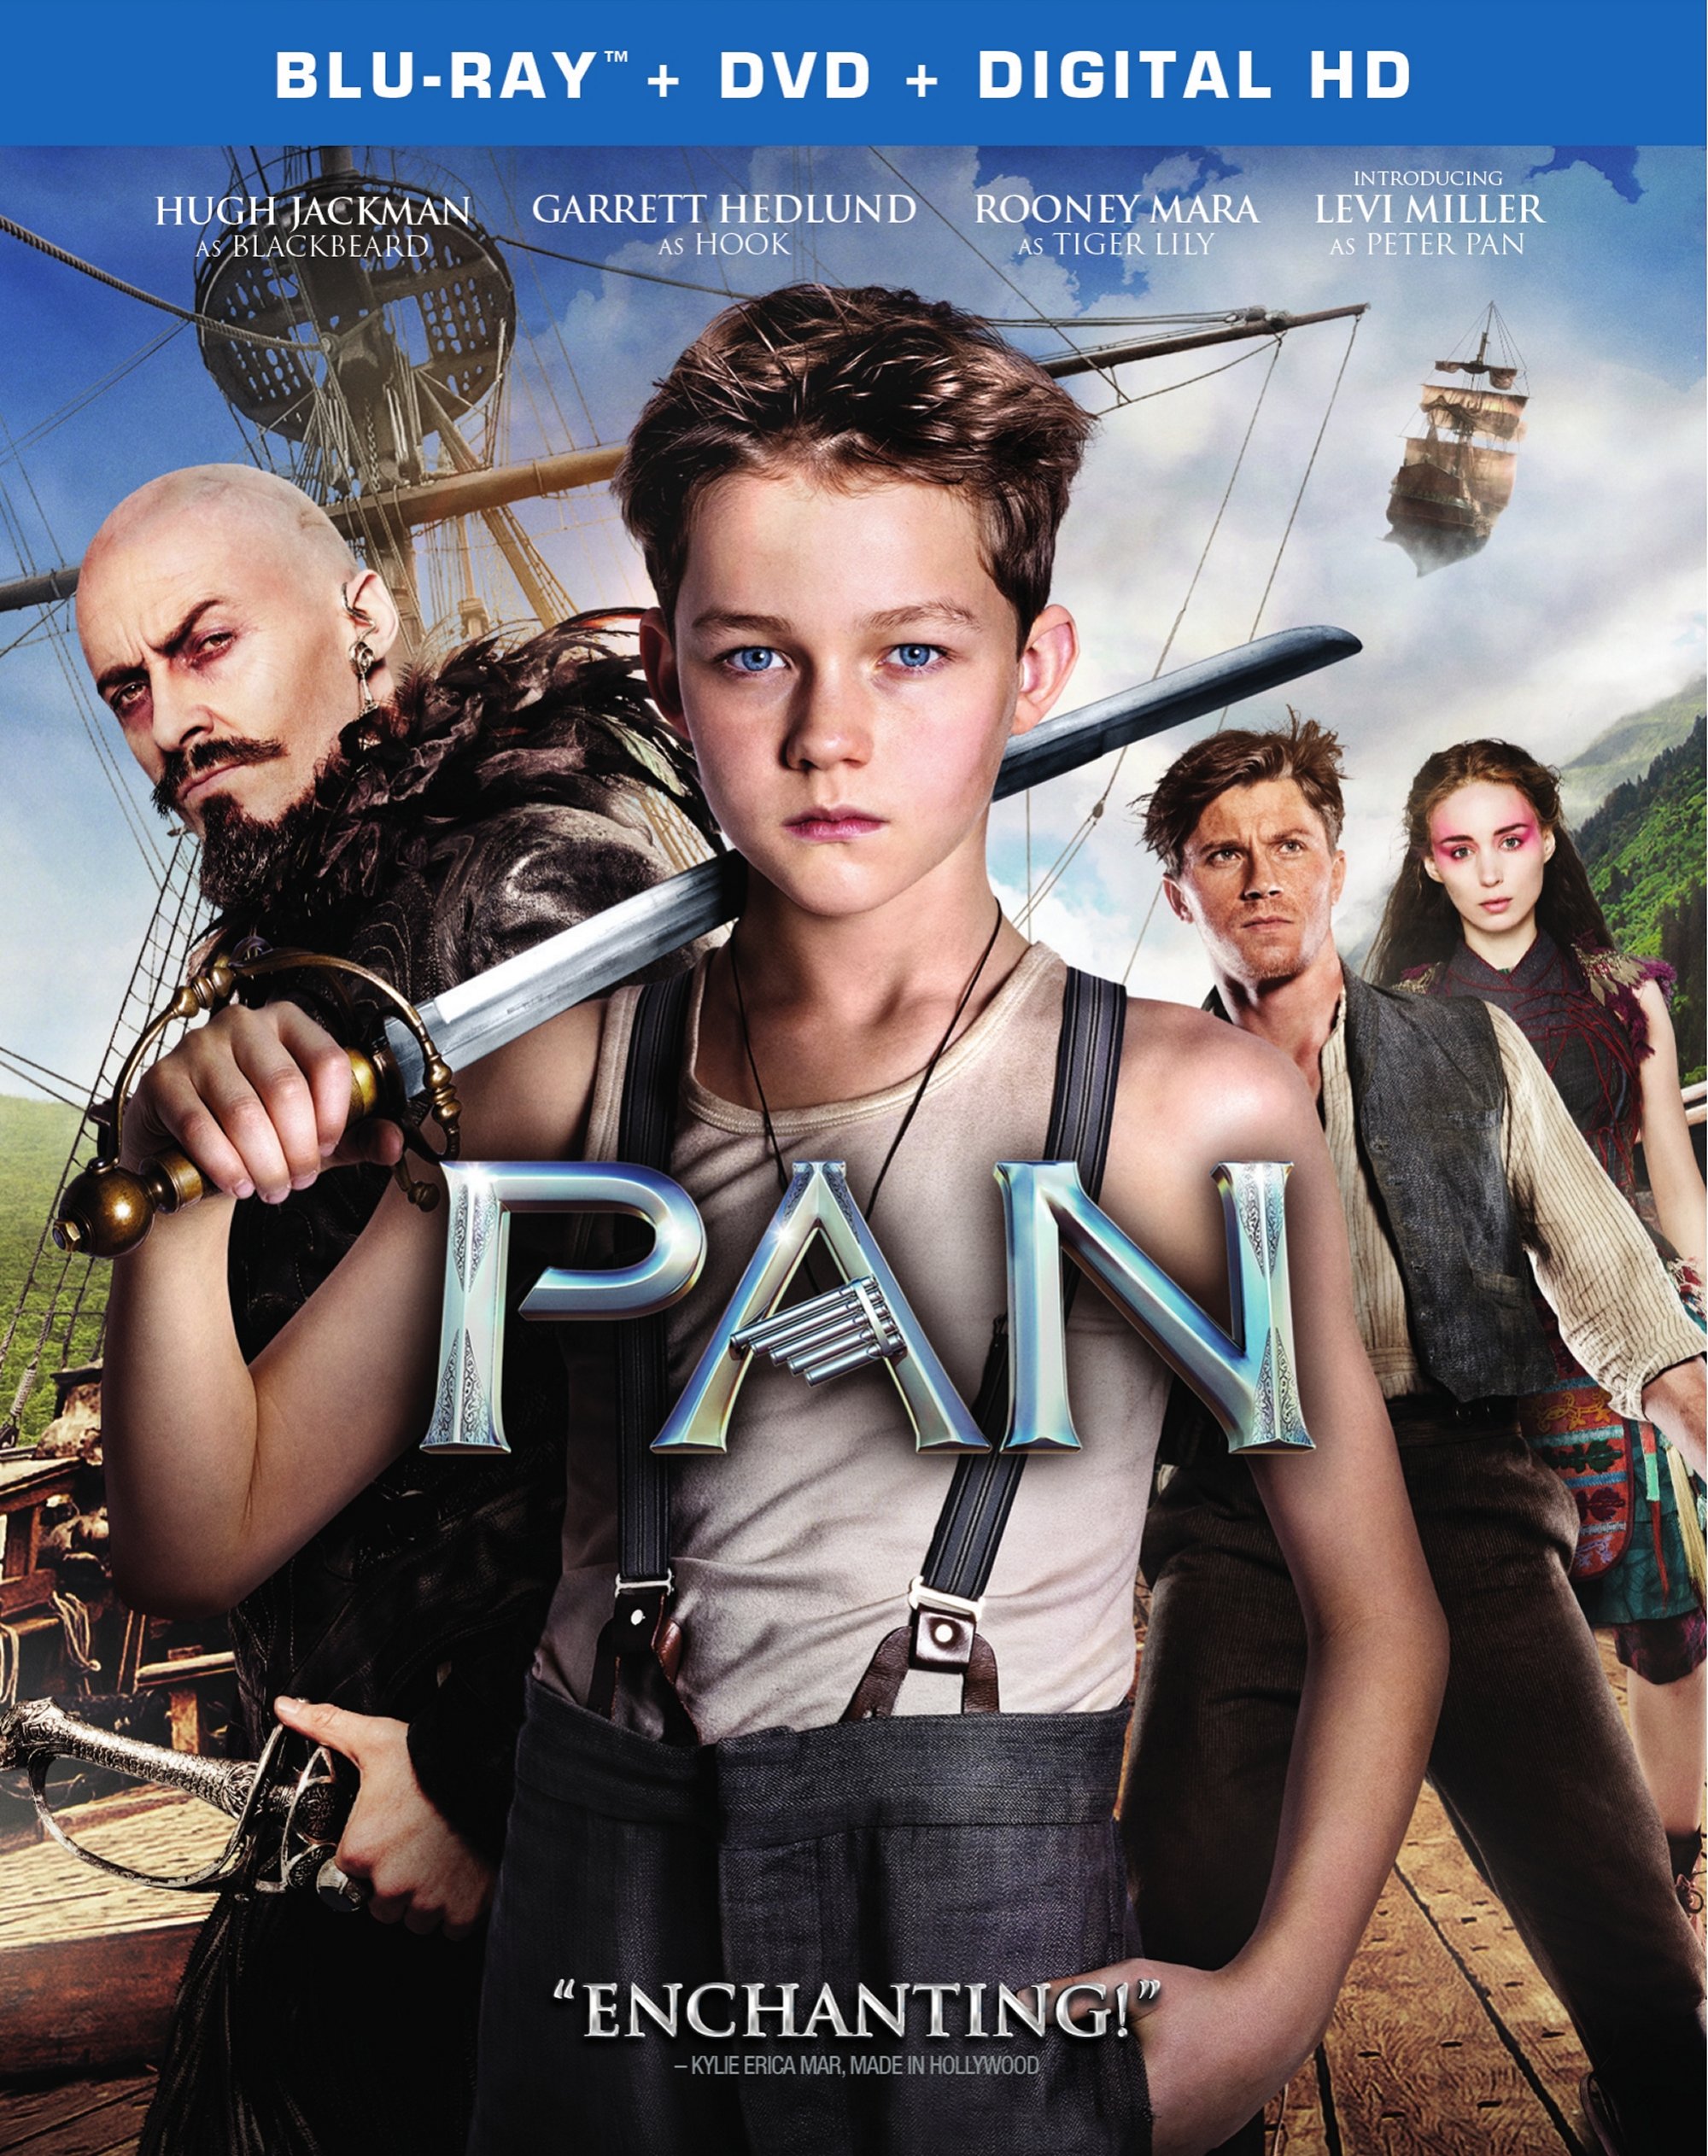 PAN – On Blu-Ray, DVD & Digital HD